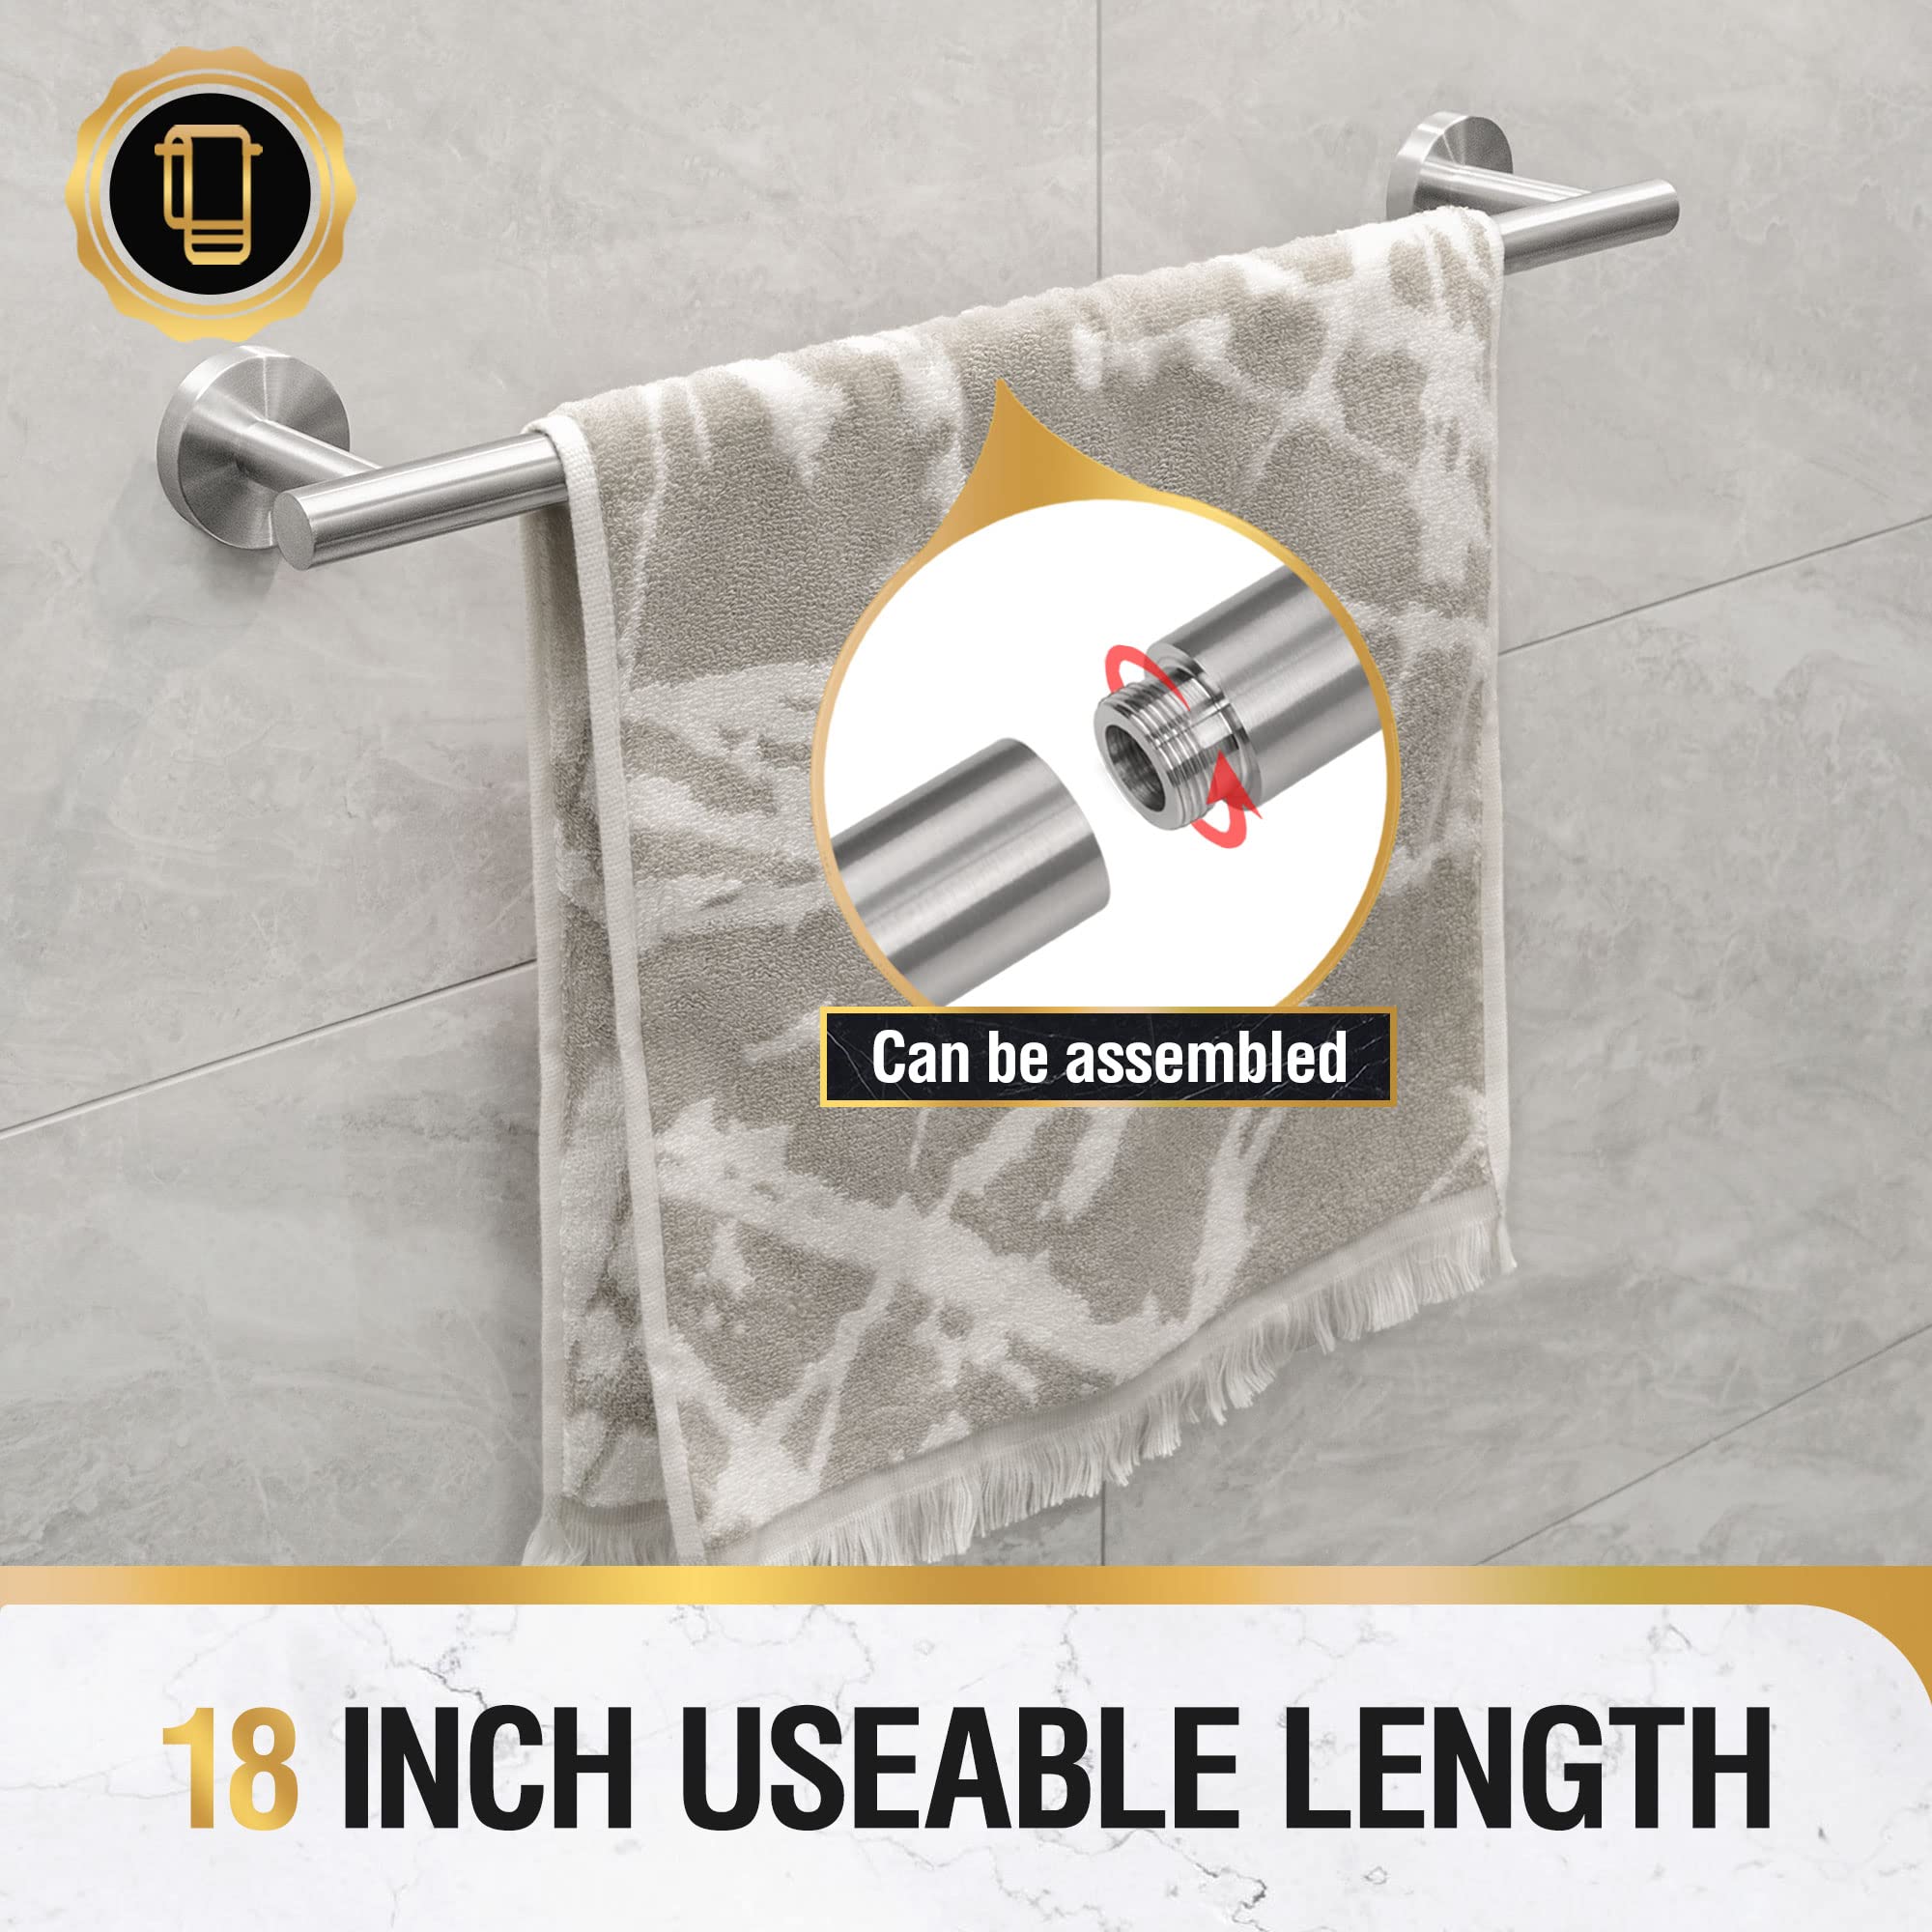 Towel Rack Wall Mounted 19.8 Inch丨Towel Bar for Bathroom 丨Towel Rack Wall Mounted丨Modern Home Decor Bath Towel Holder